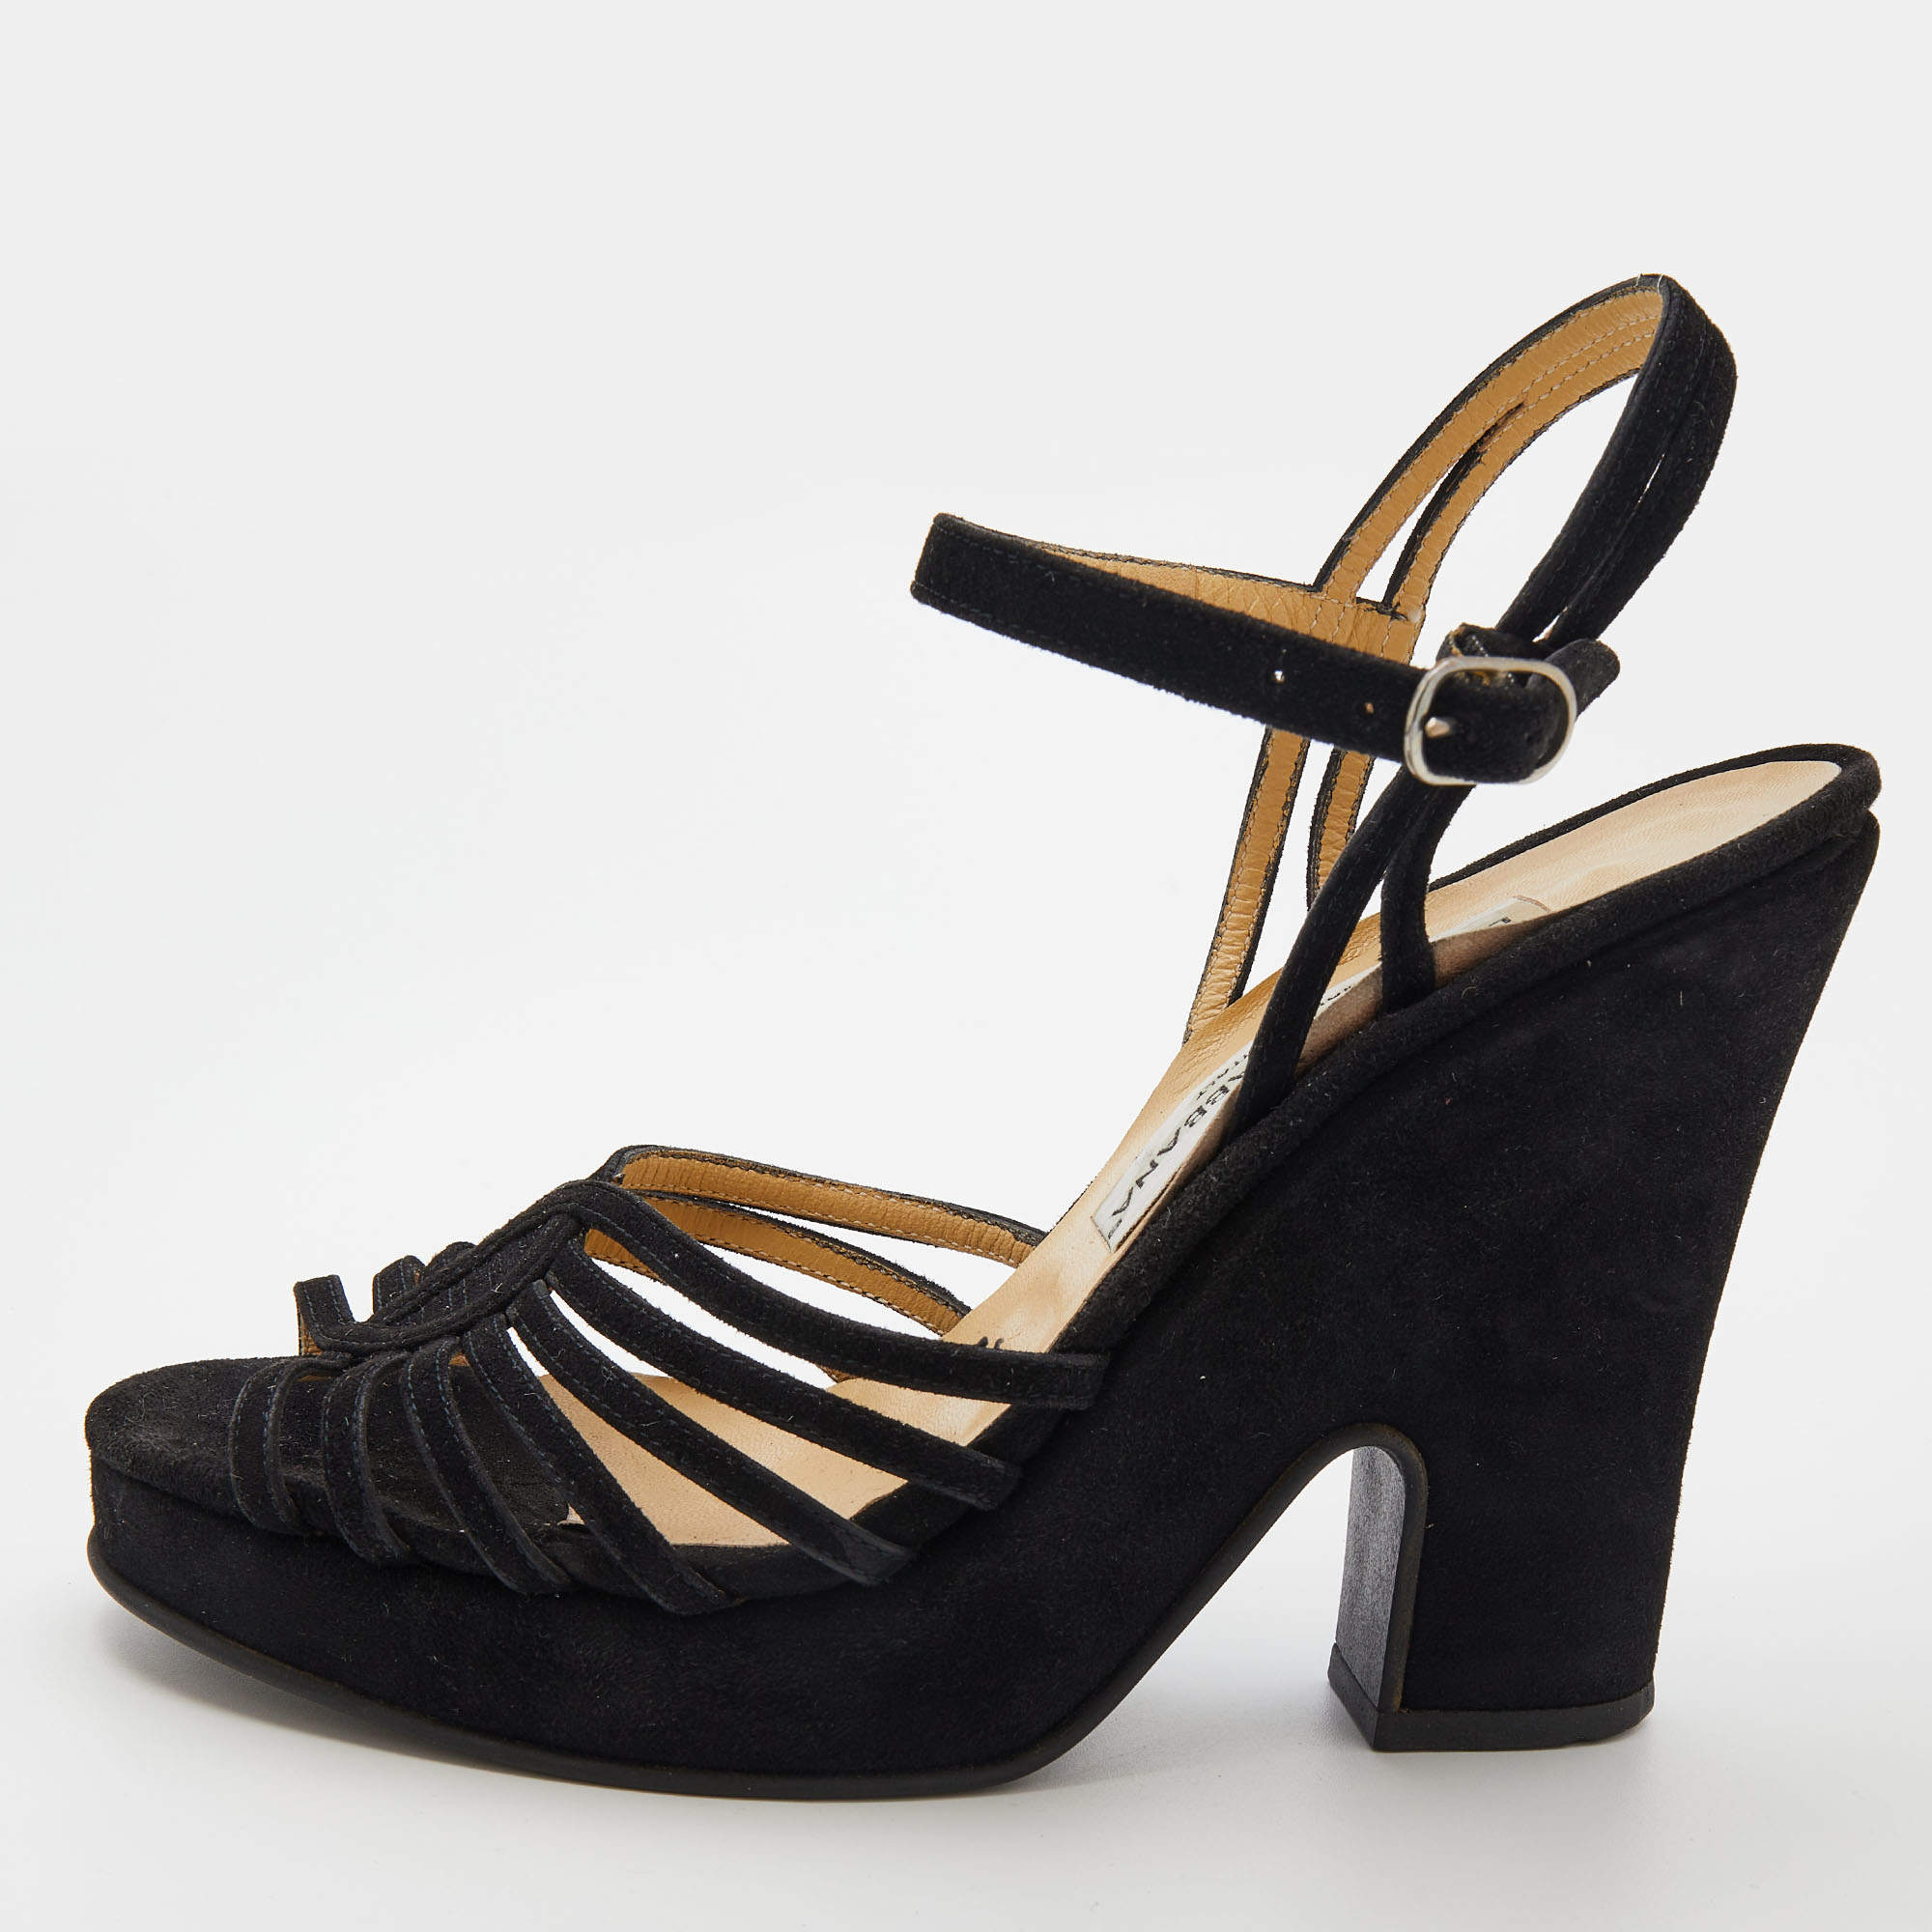 Dolce & Gabbana Black Suede Ankle Strap Wedge Sandals Size 38.5